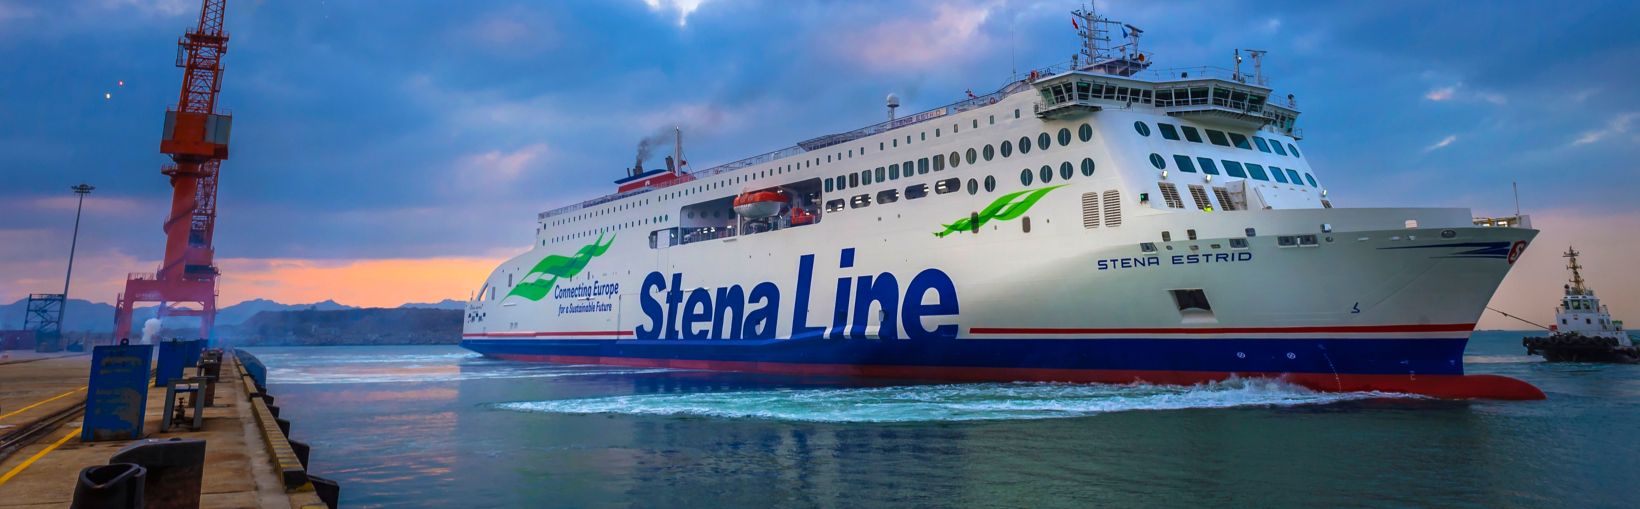 Ferry Stena Estrid quittant le port